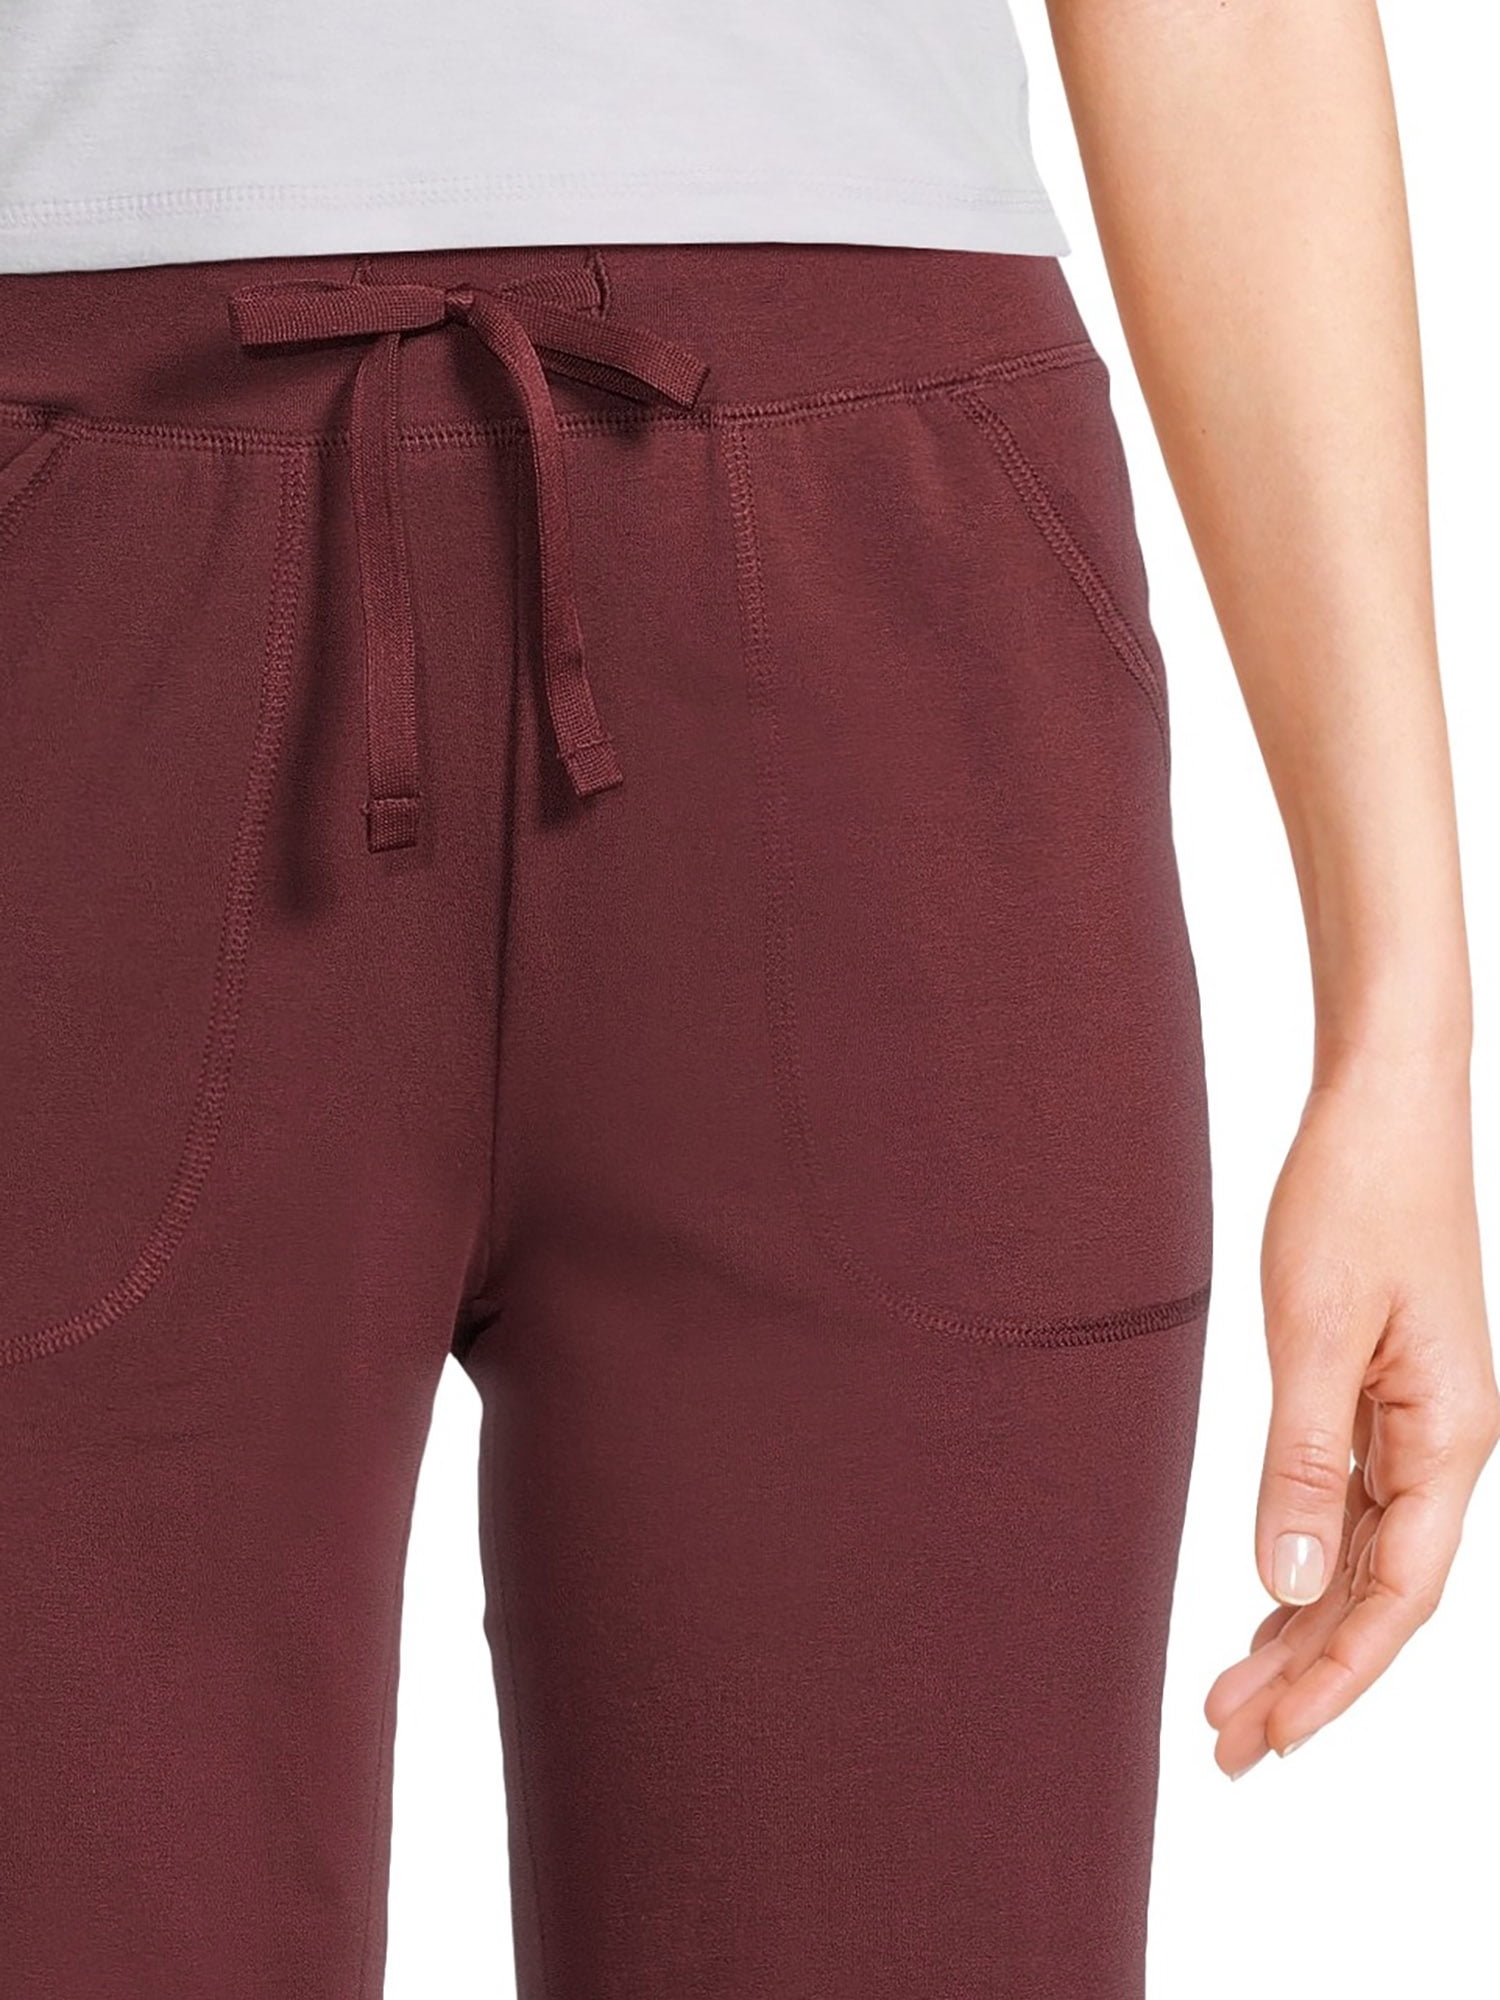 Athletic Works Women's Knit Capri Pants, Sizes XS-XXXL 